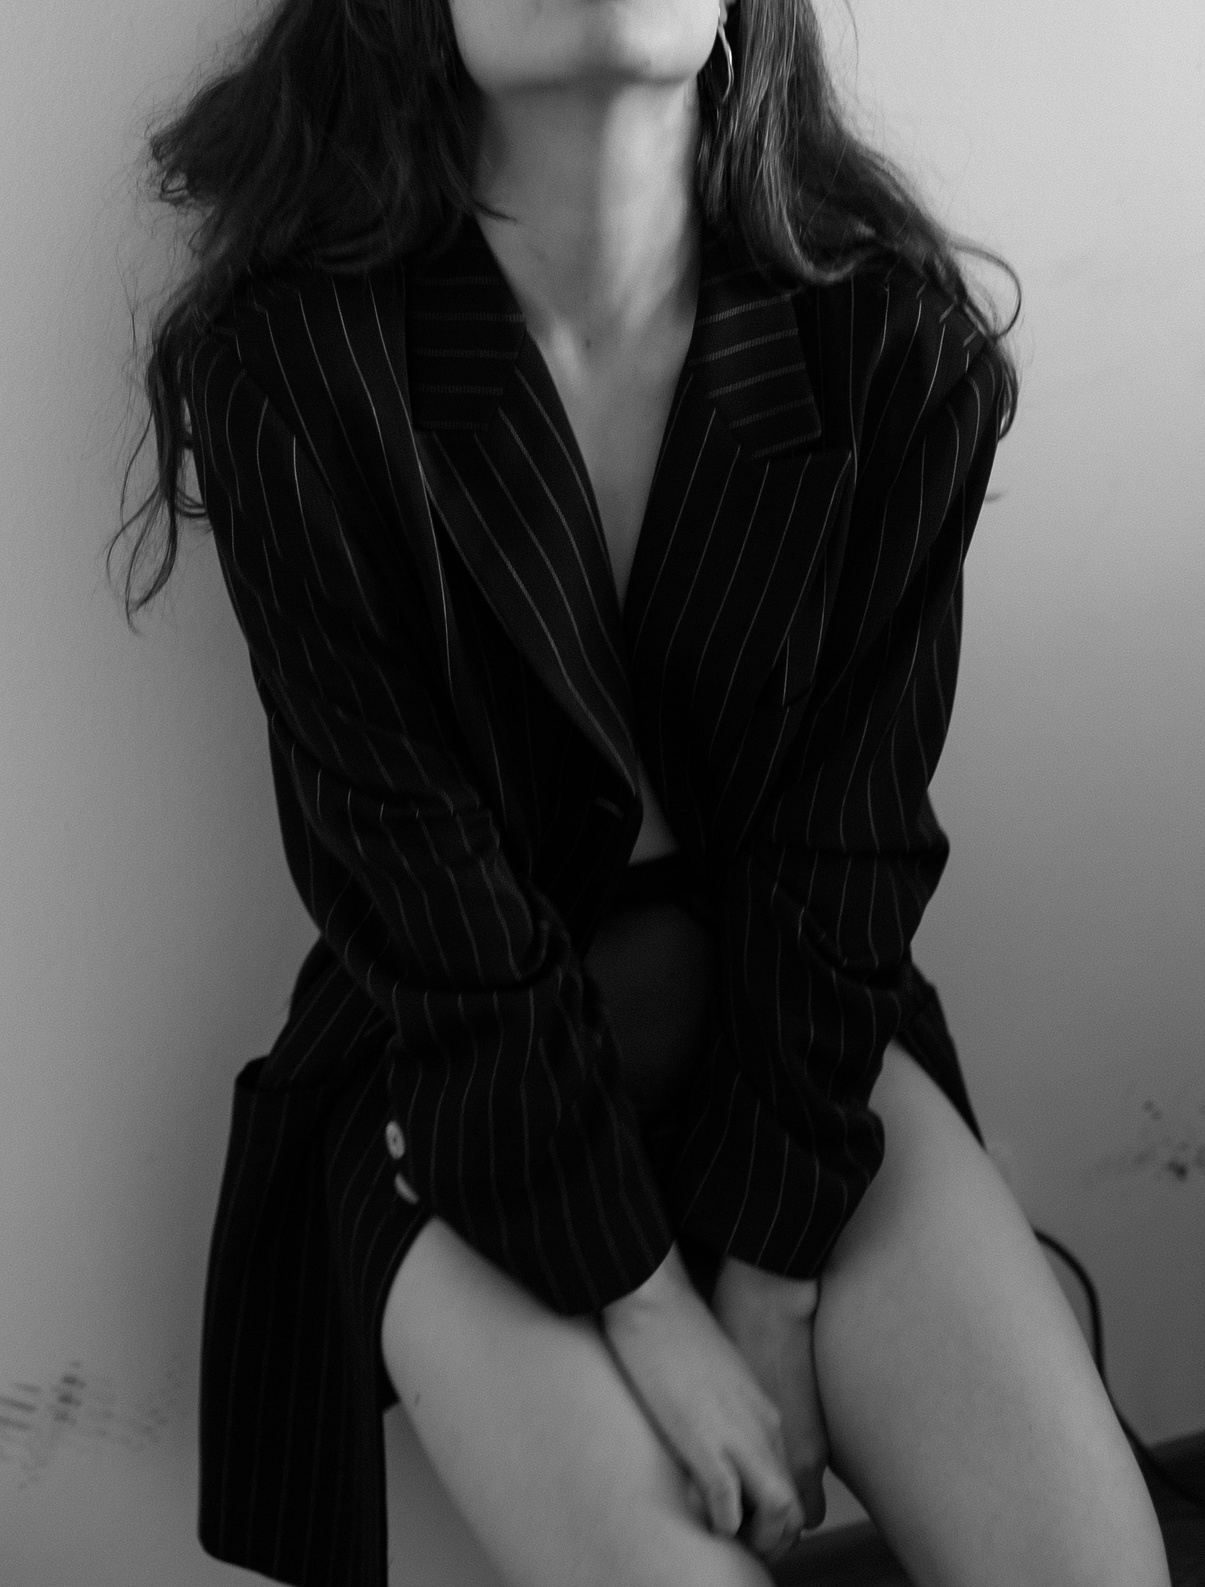 Woman in Black and White Striped Blazer